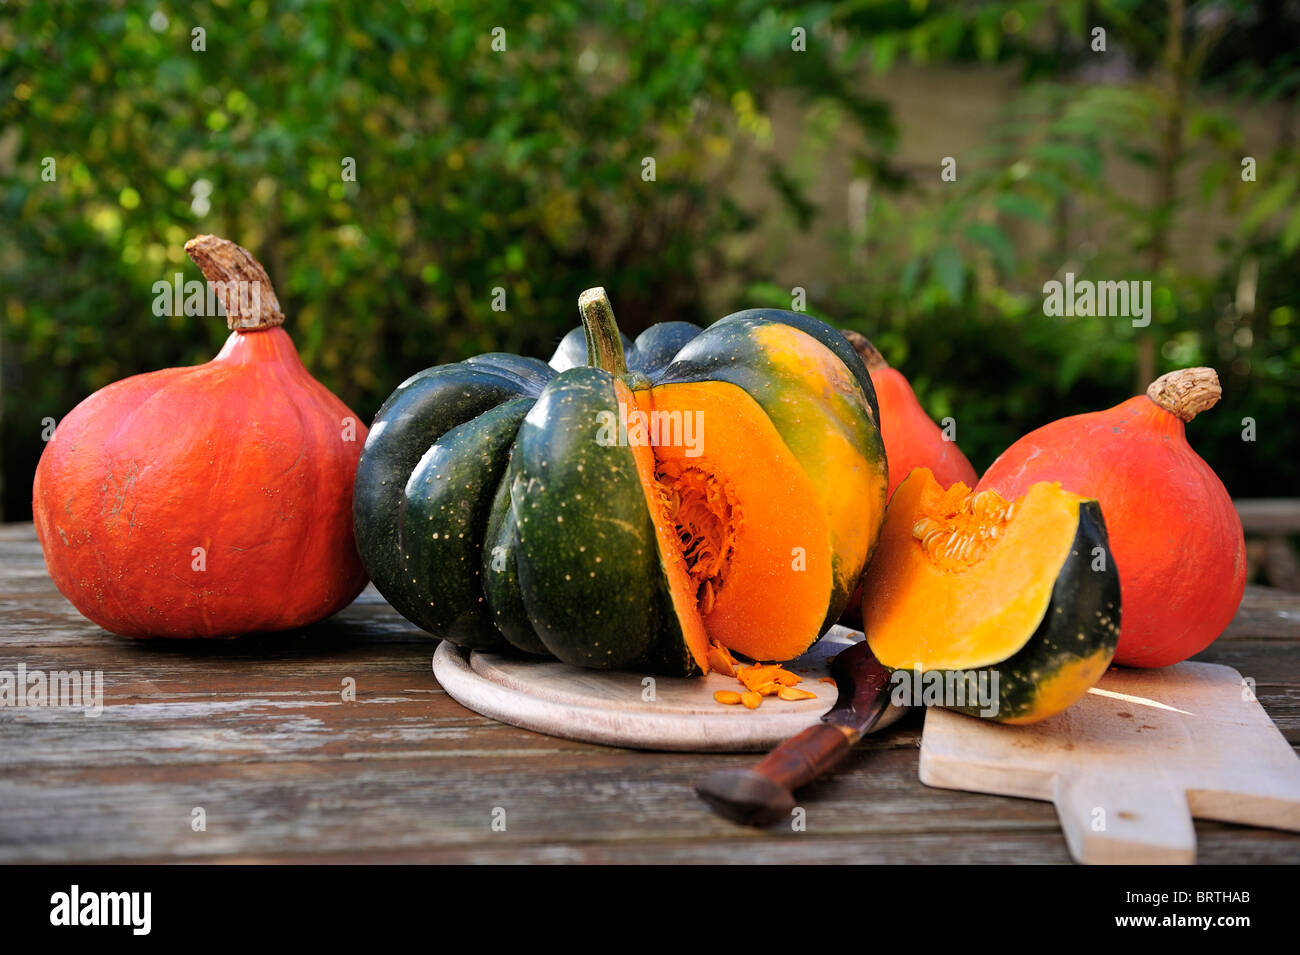 Cut of green Acorn squash and orange Hokkaido pumpkins on a wooden board Stock Photo